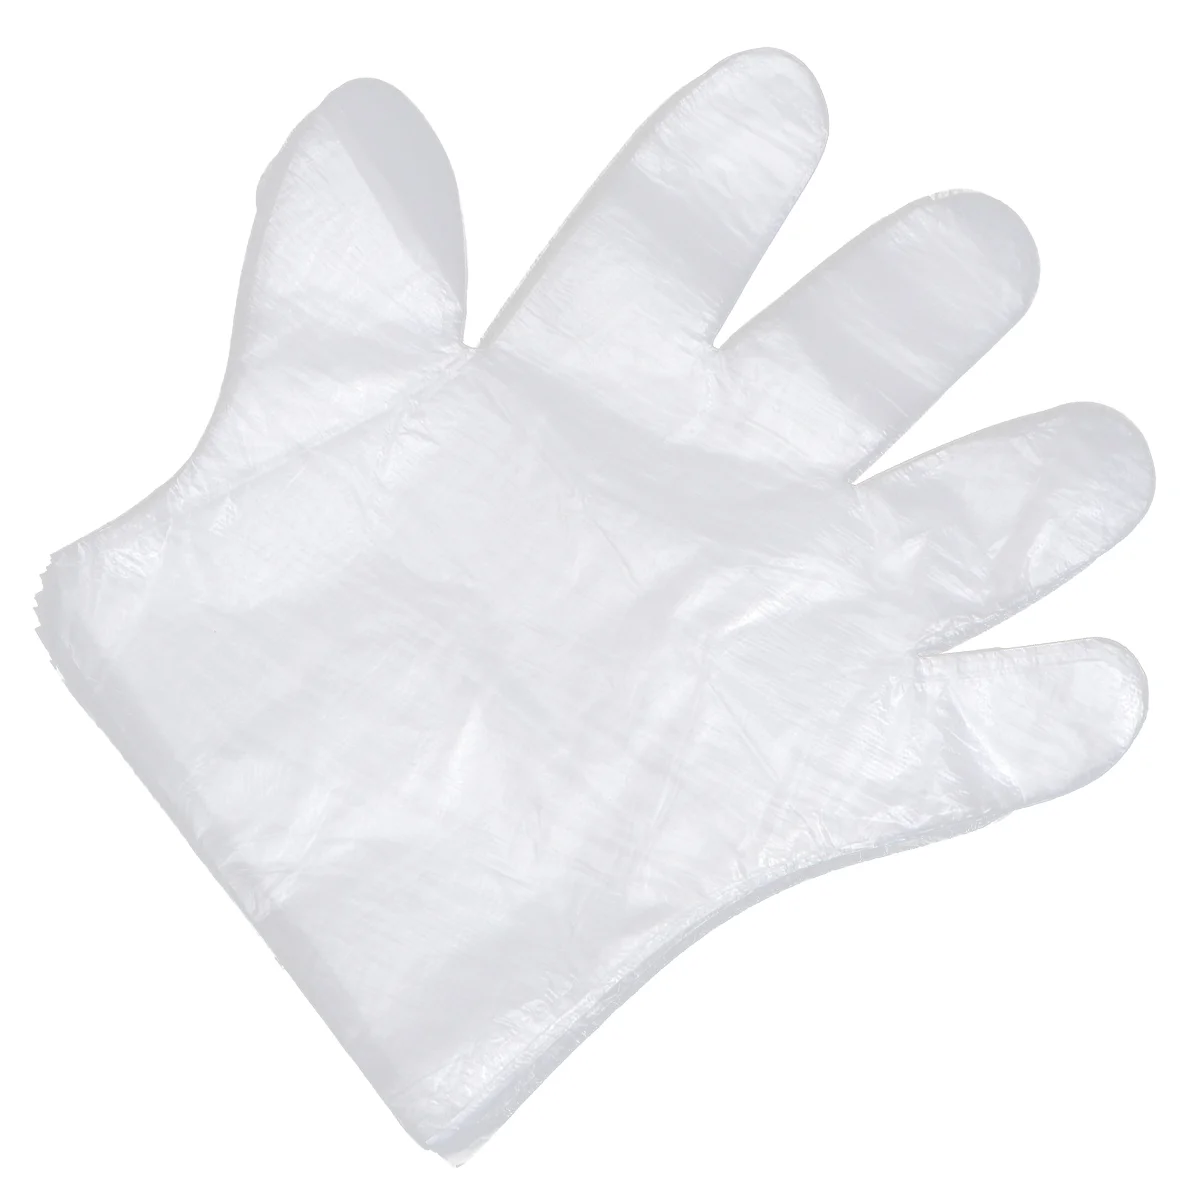 

Gloves Disposable Cooking Medium Prep Service Handling Cleaning Grade Transparent Pe Polyethylene Safety Waterproof White Safe